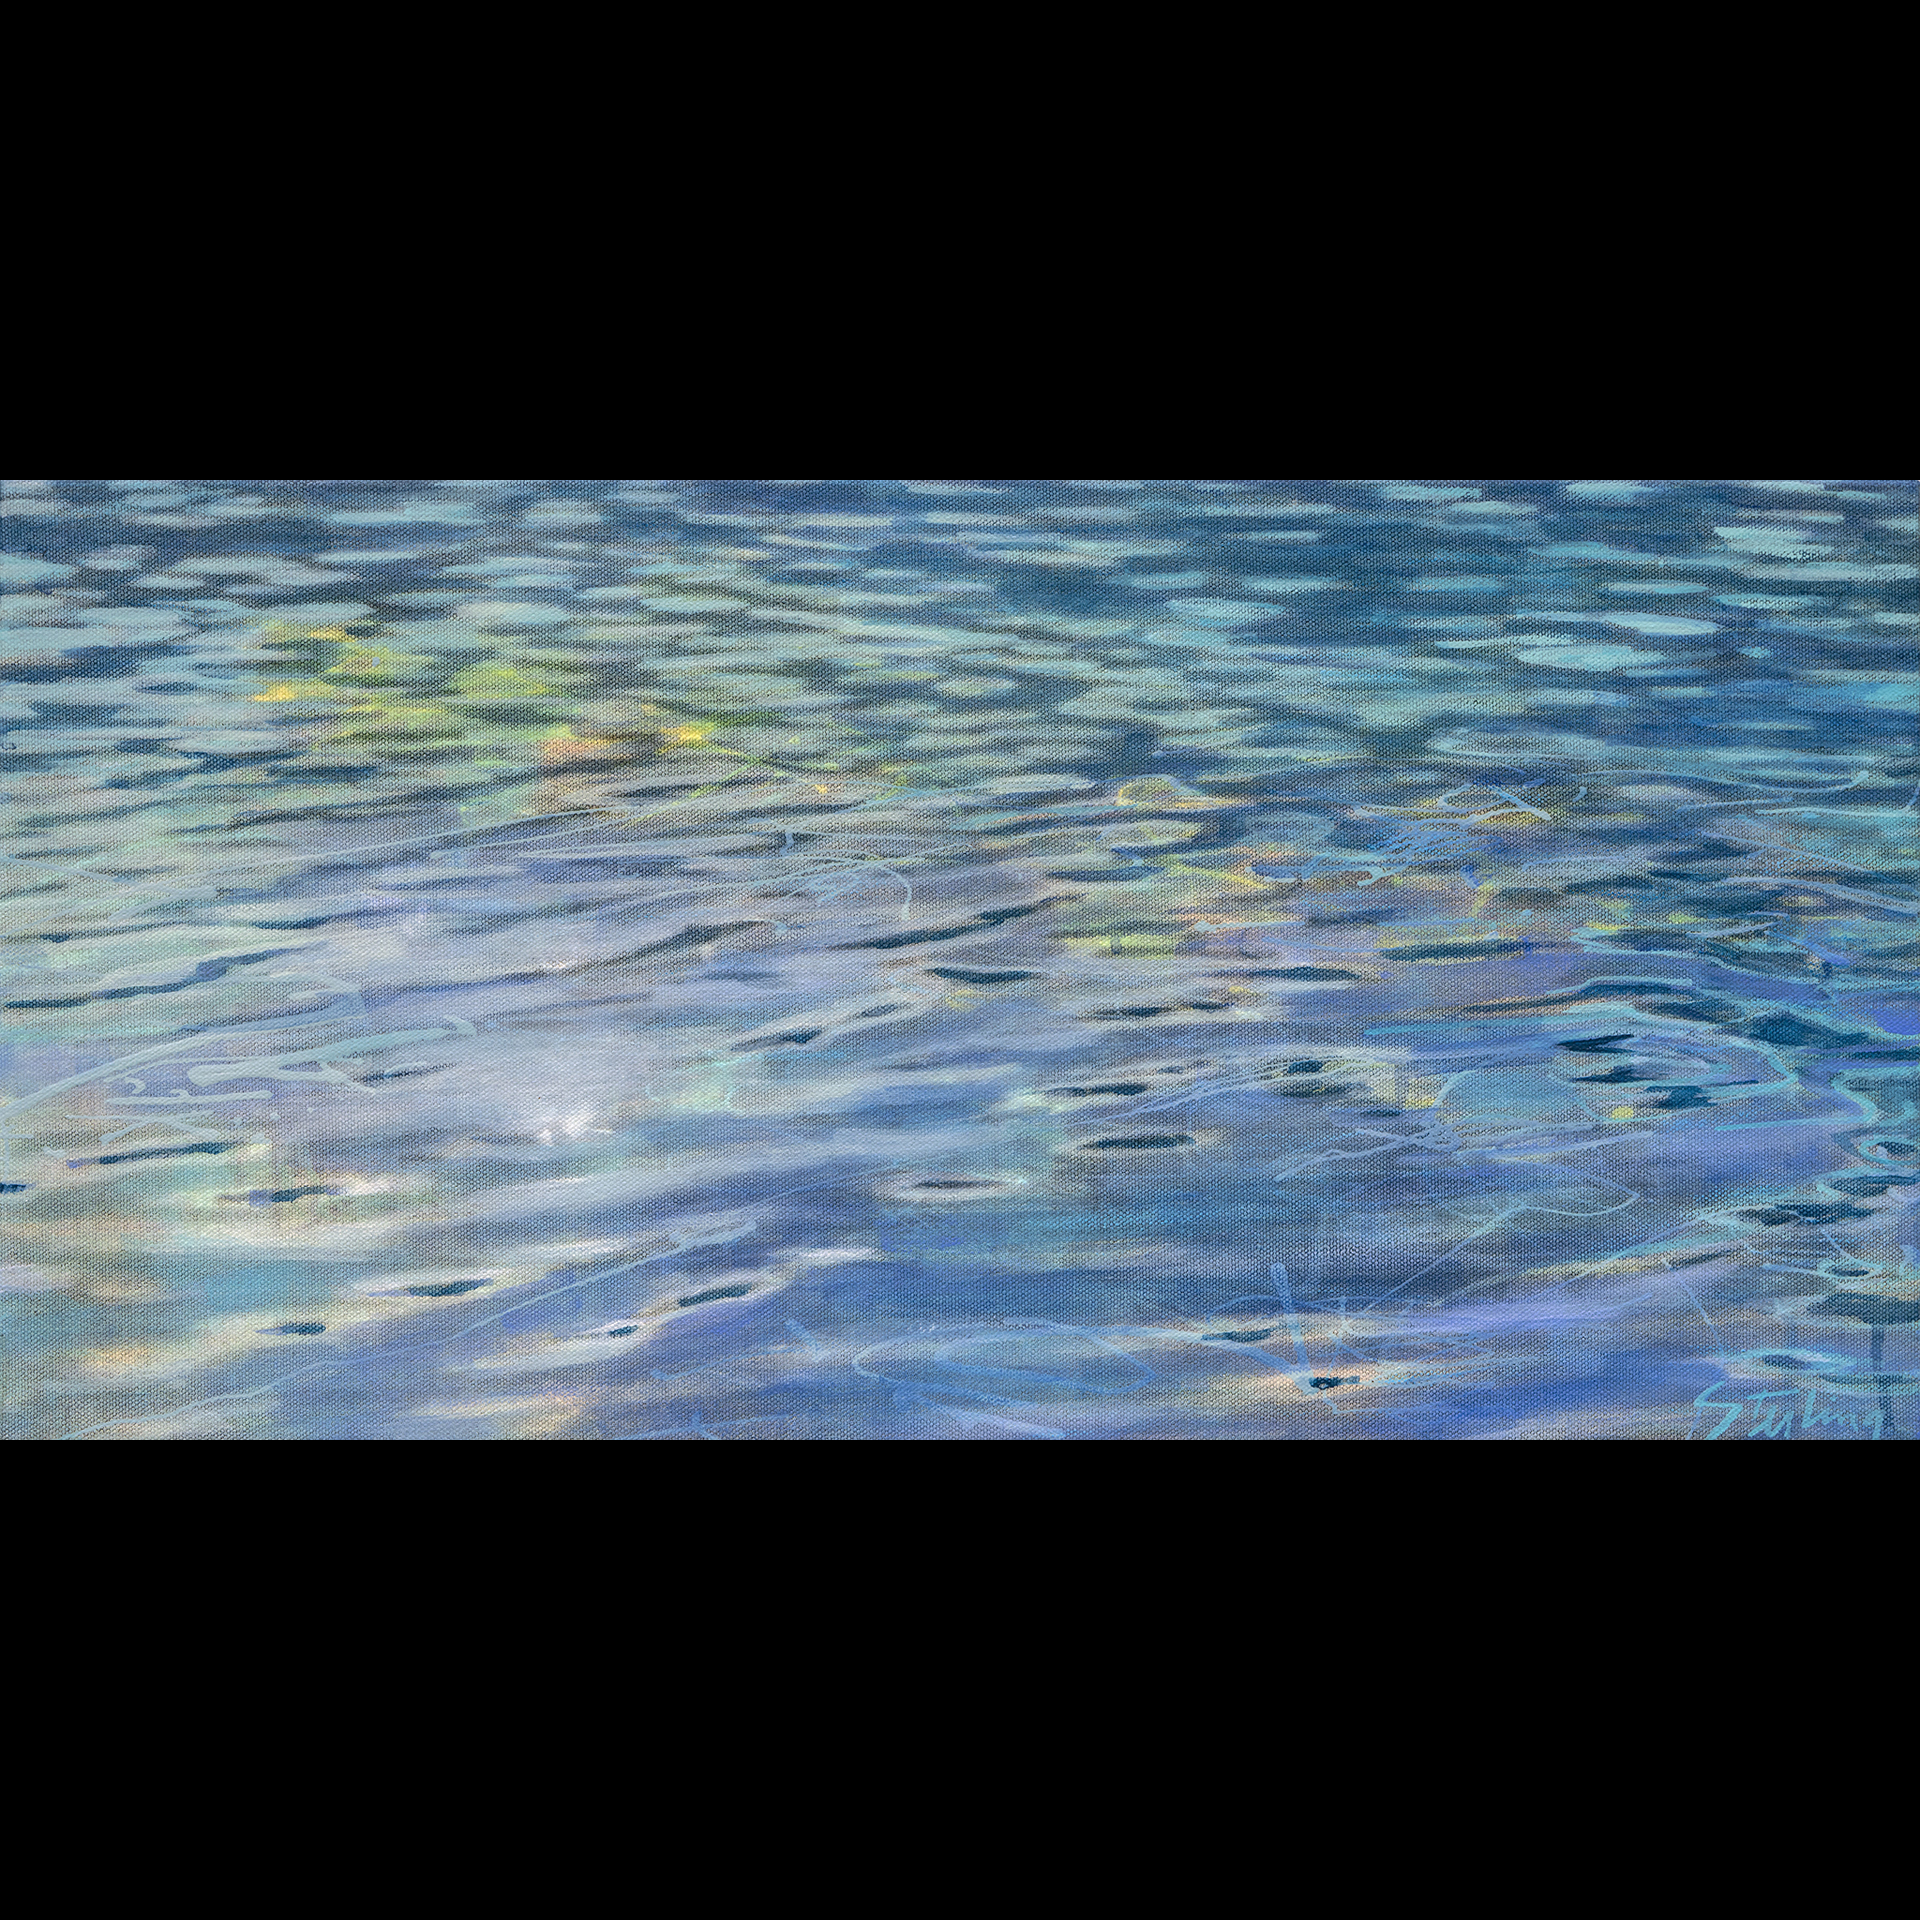 Moonlight Swim
acrylic on canvas
12x24